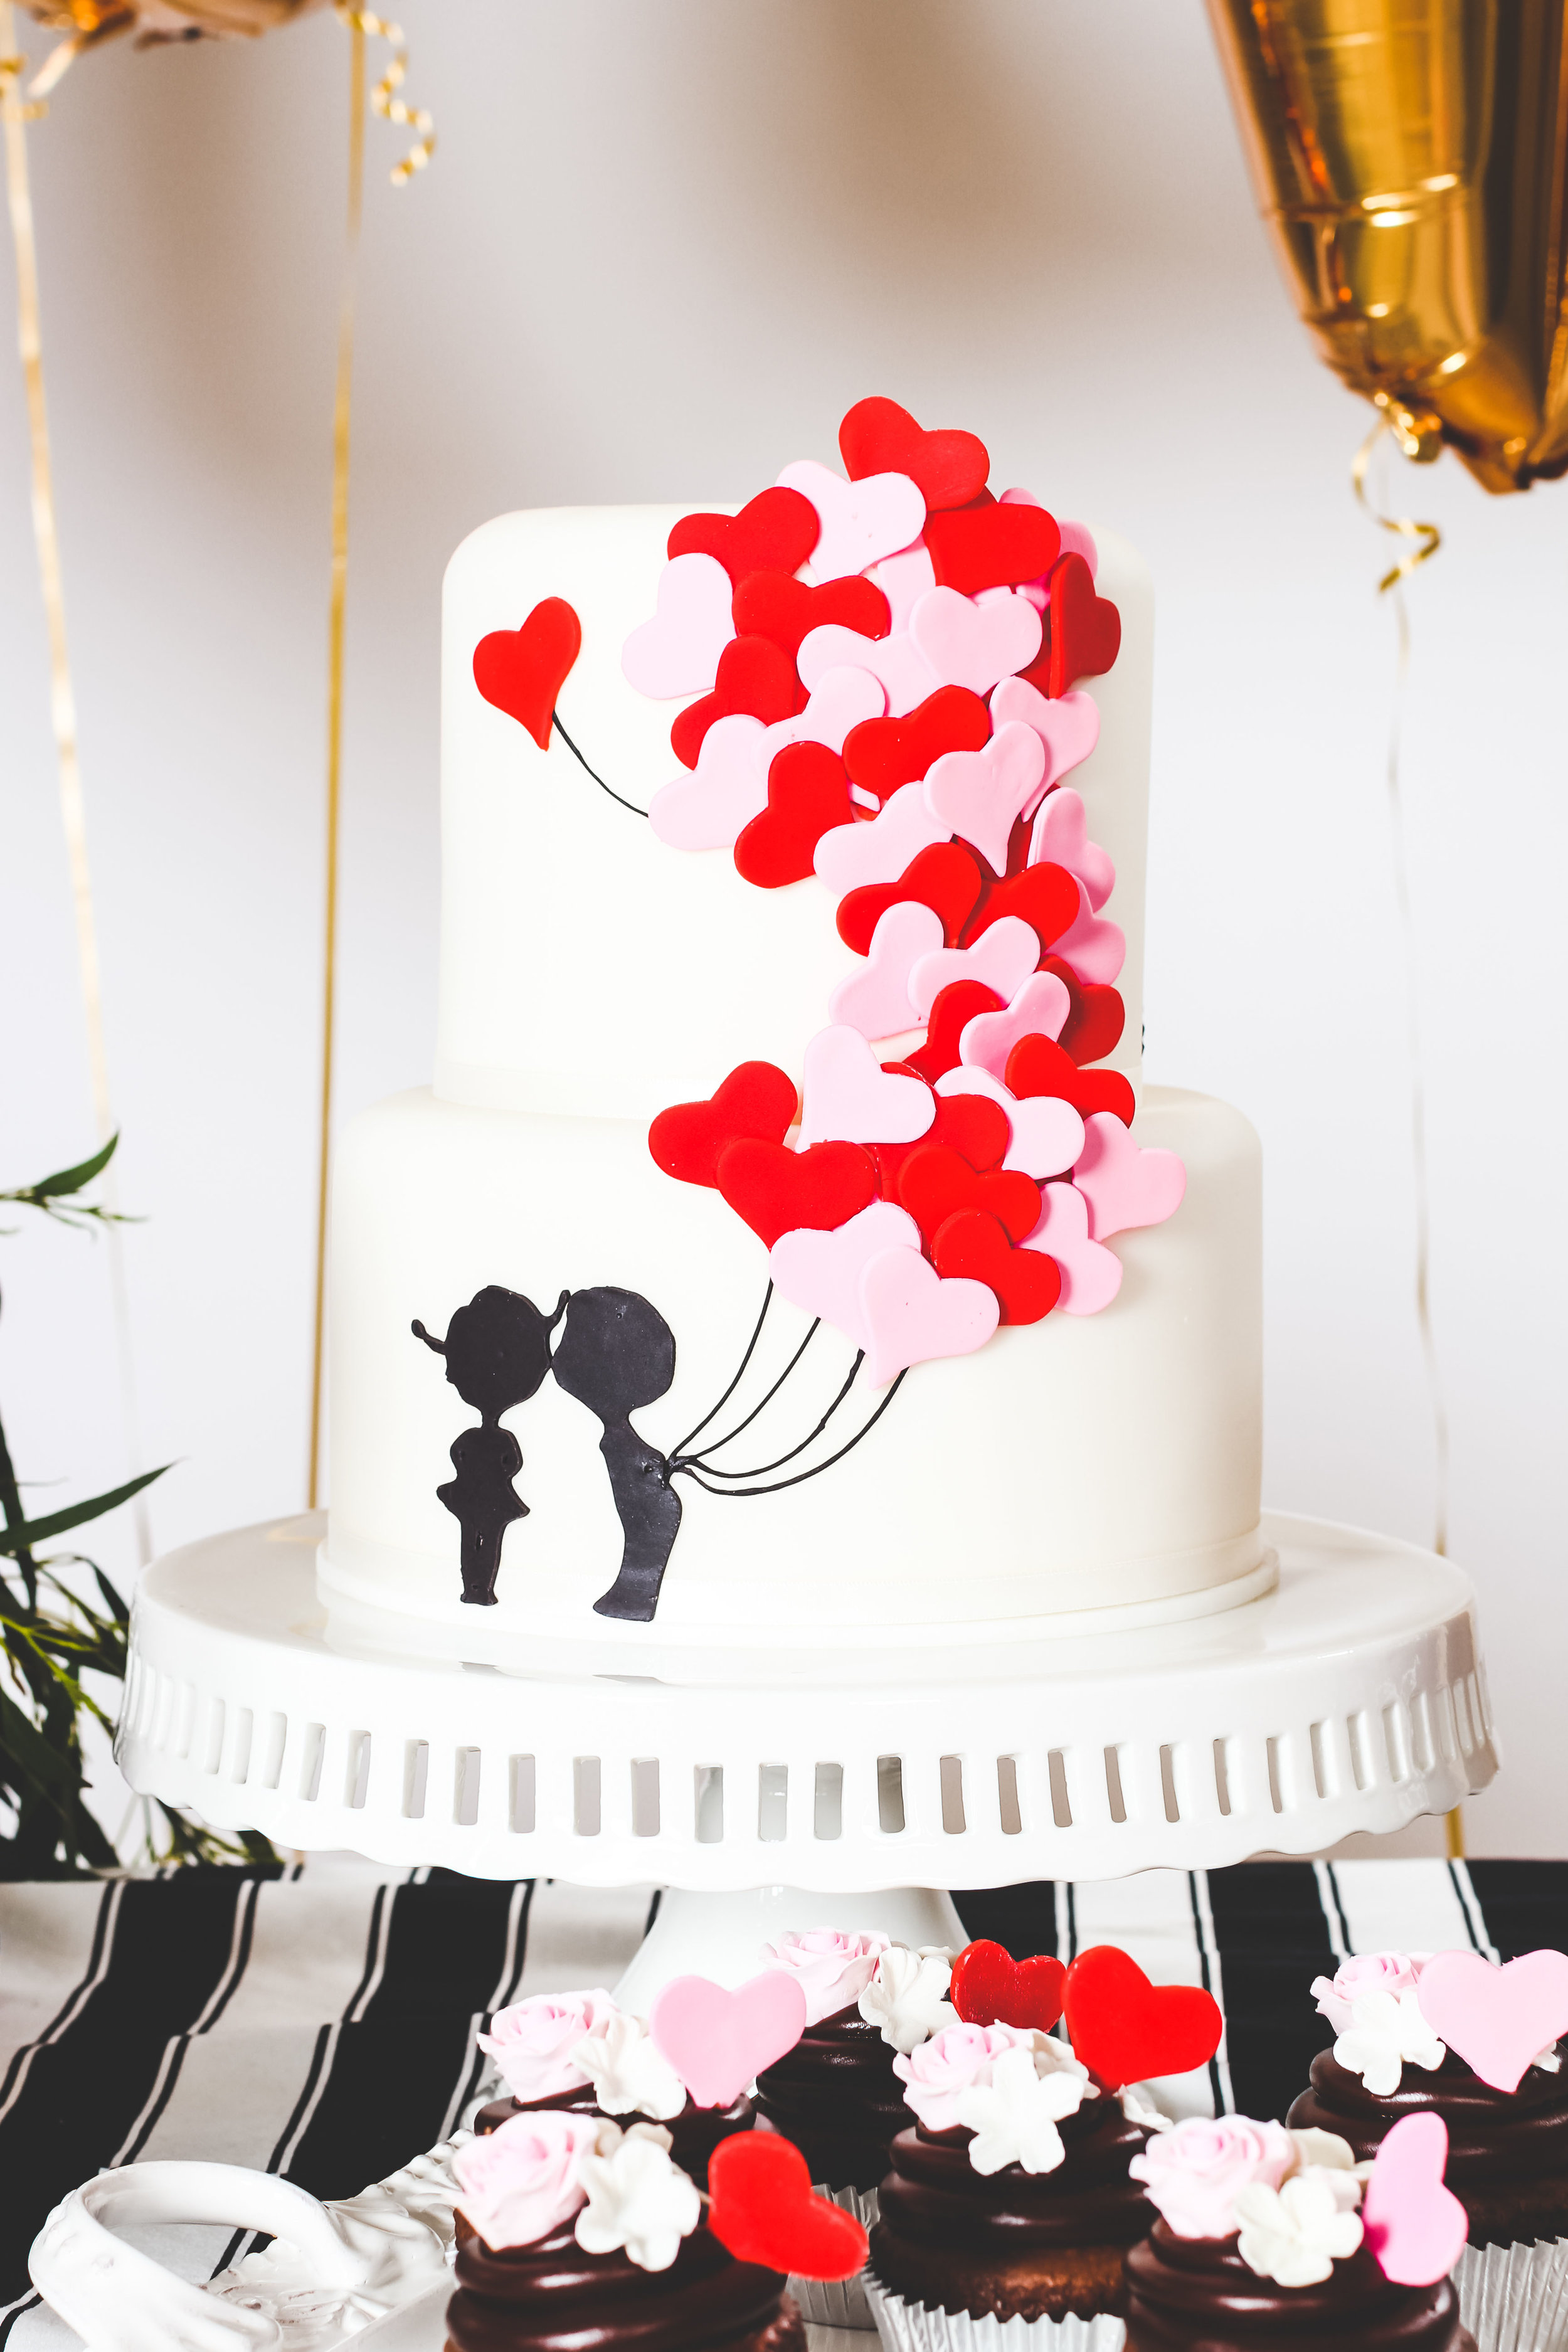 11 Romantic Valentine Cake Ideas To Wow Your Special Someone This Year -  Wondafox | Valentine cake, Romantic valentine, Valentine